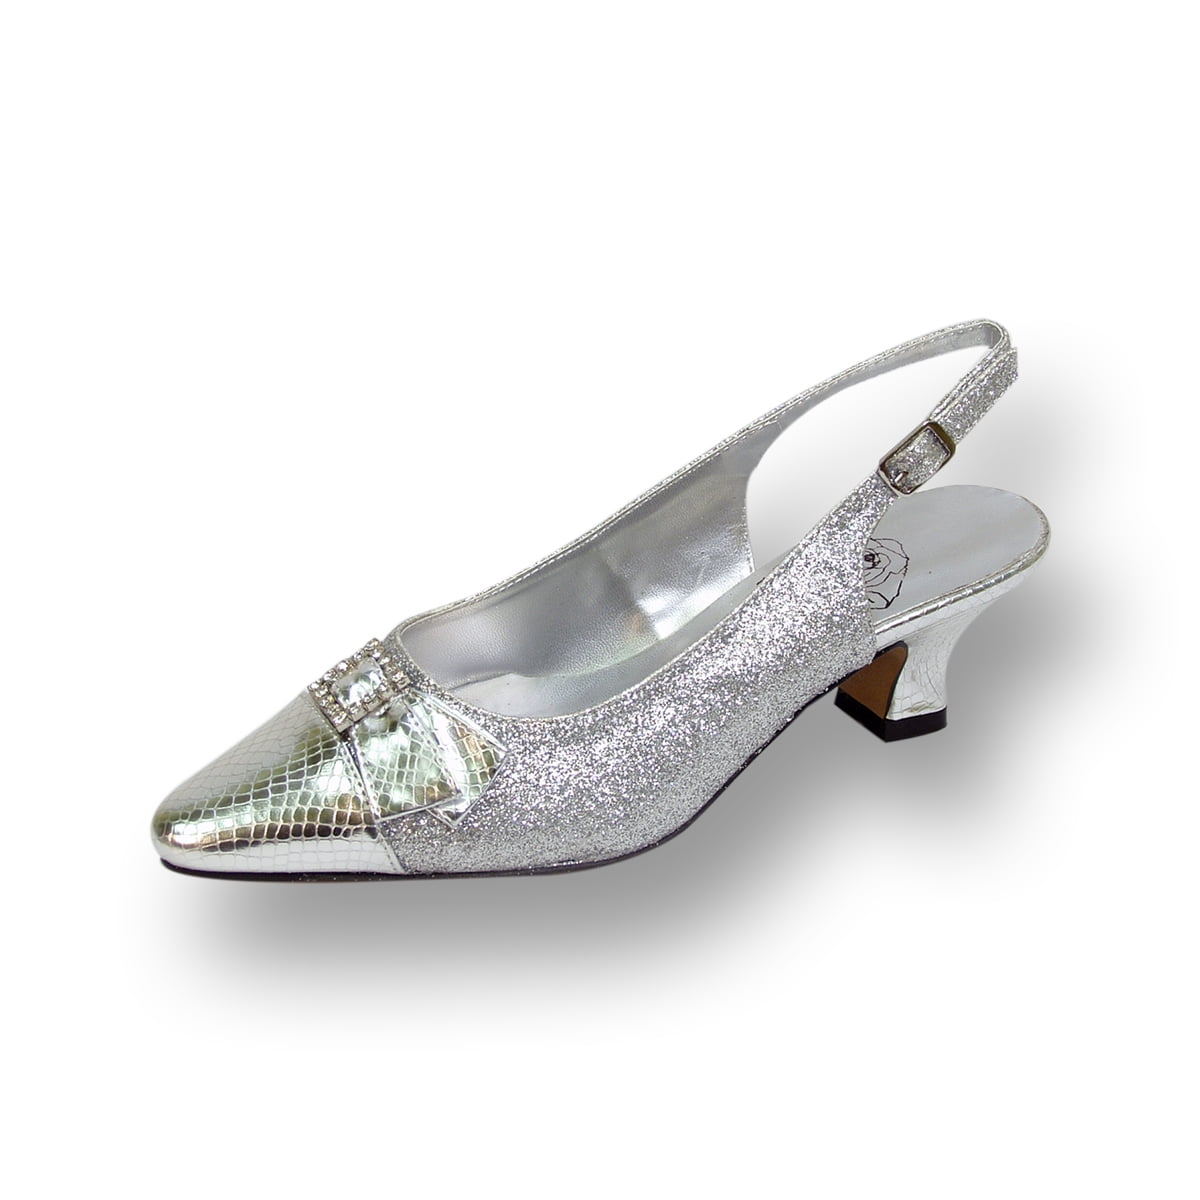 Midress Sandals Women Snake Elegant Pointed Slingbacks Wedding Party Shoes Flat Sandals Slippers